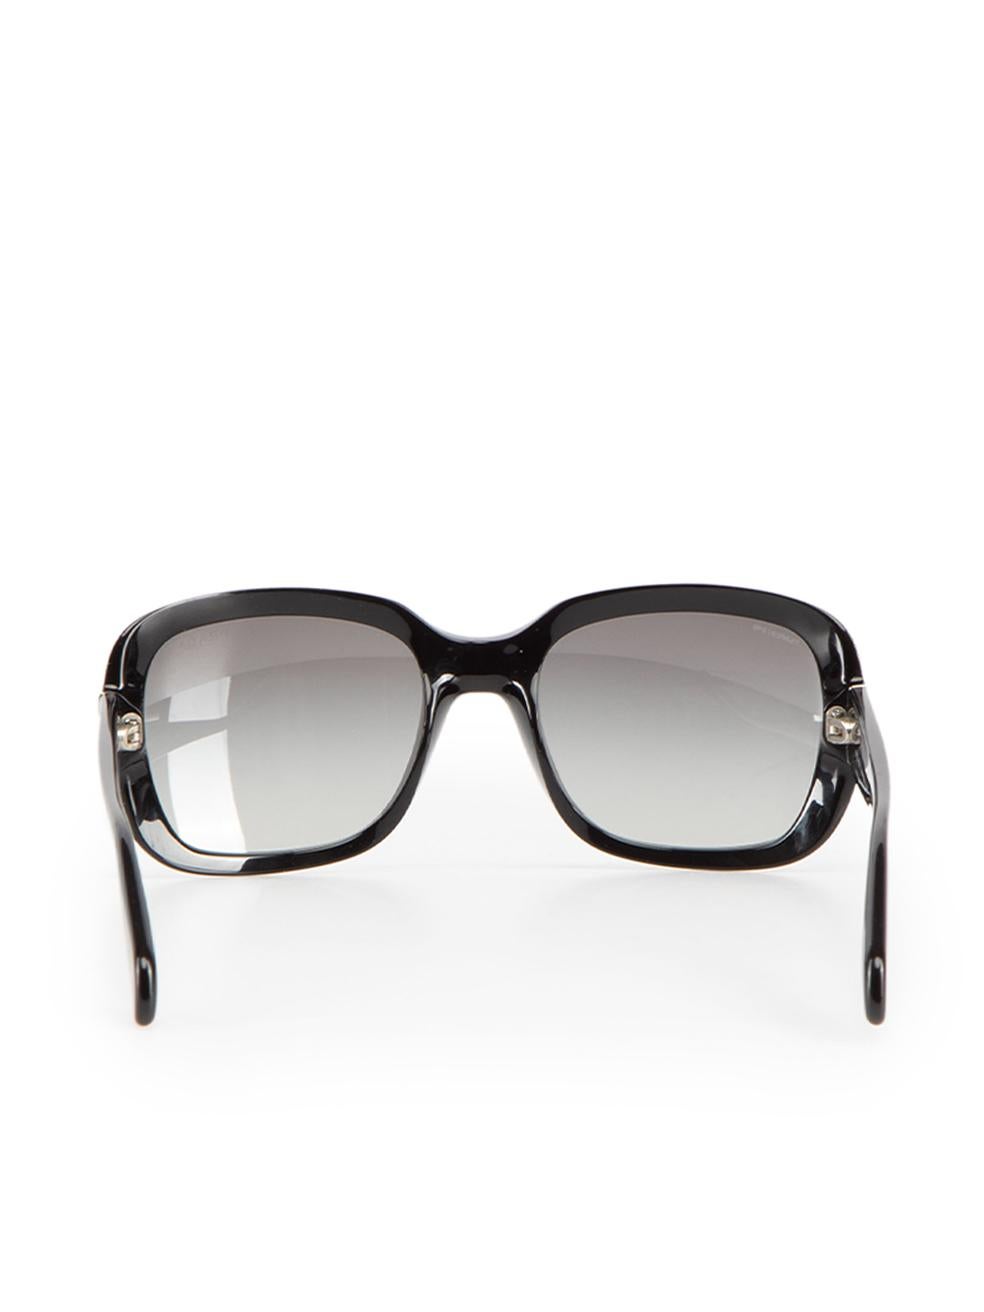 Prada Black Square Tinted Sunglasses In Good Condition For Sale In London, GB